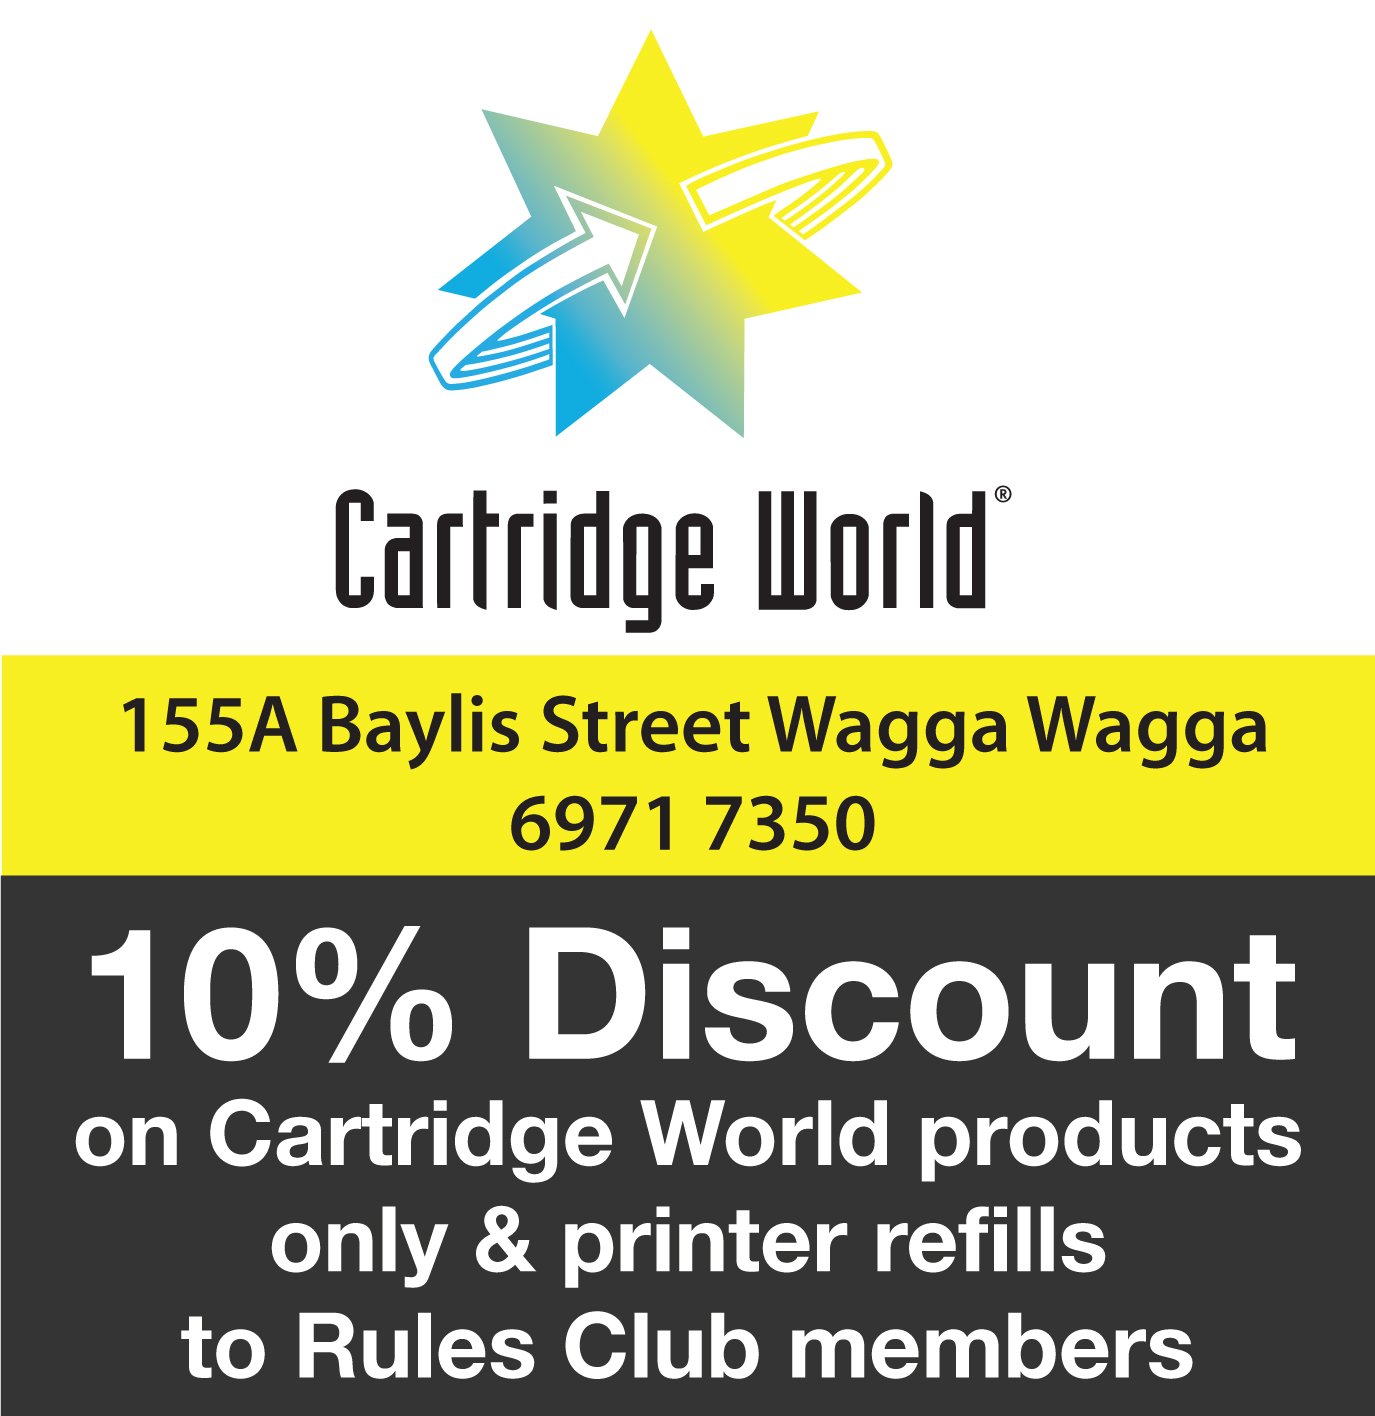 12-Cartridge World-discount.jpg